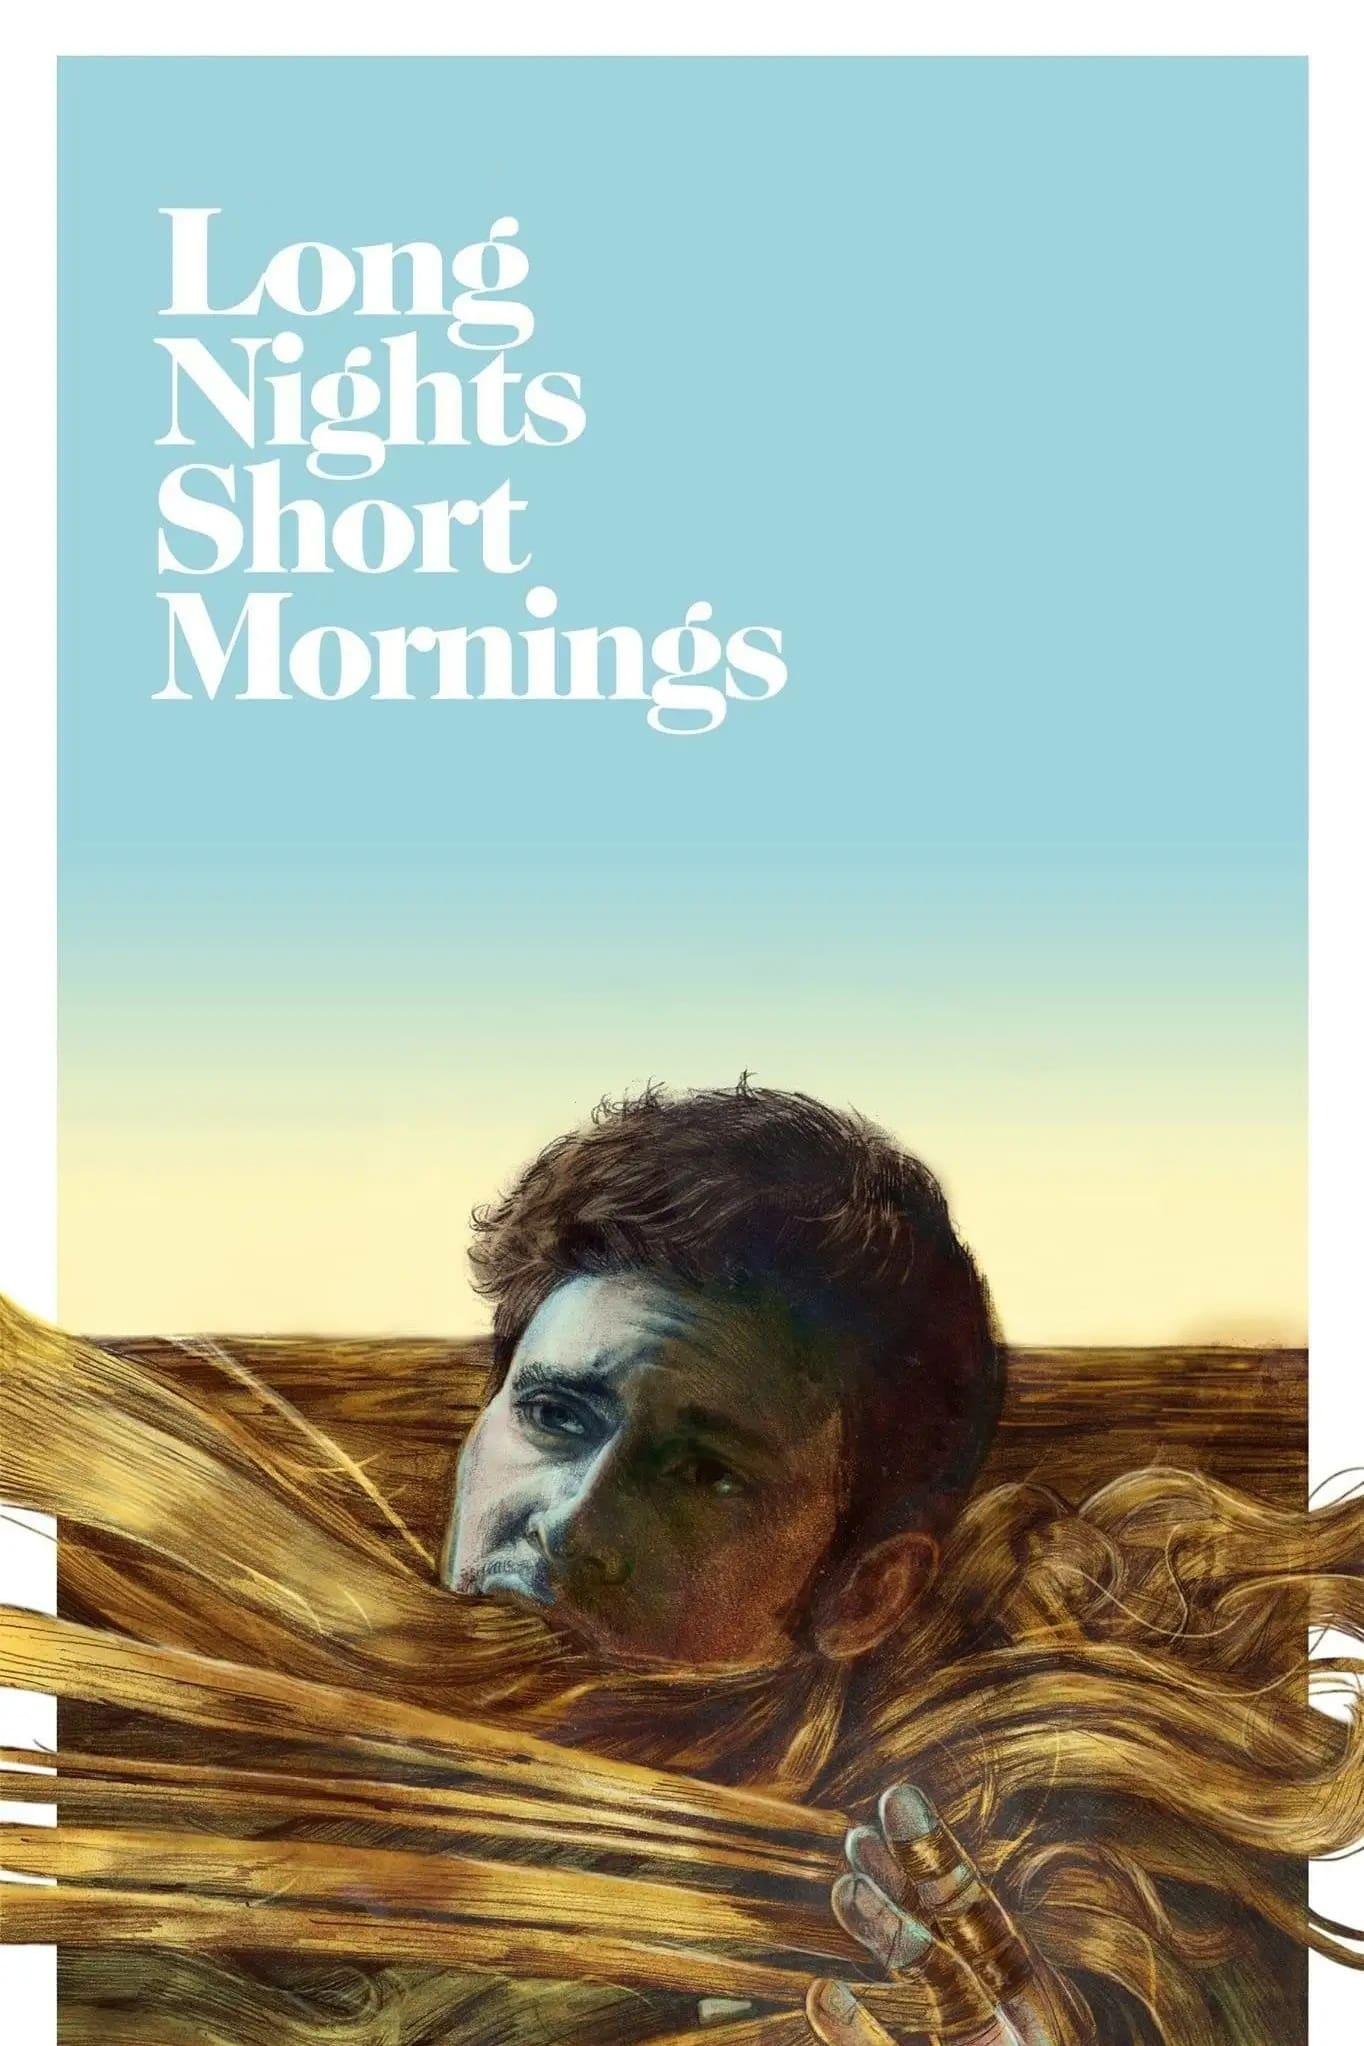 Long Nights Short Mornings poster